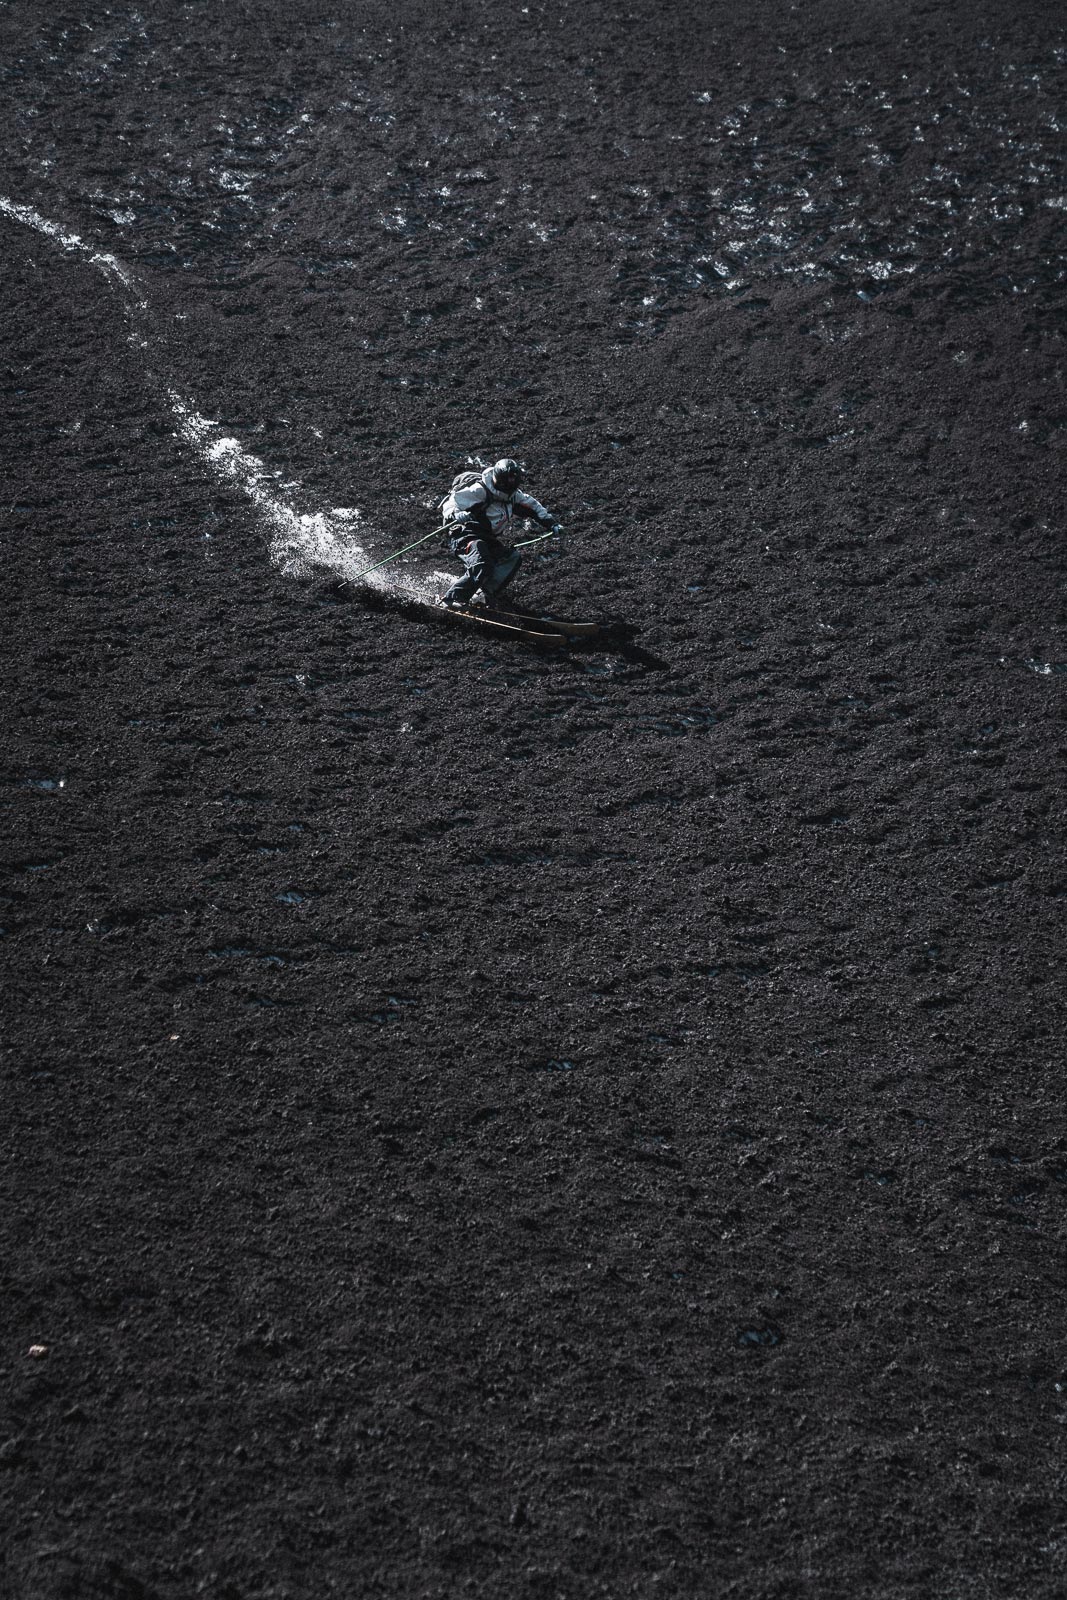 Mammut Skiing athlete Shanty Cipolli sking on Mt. Etna